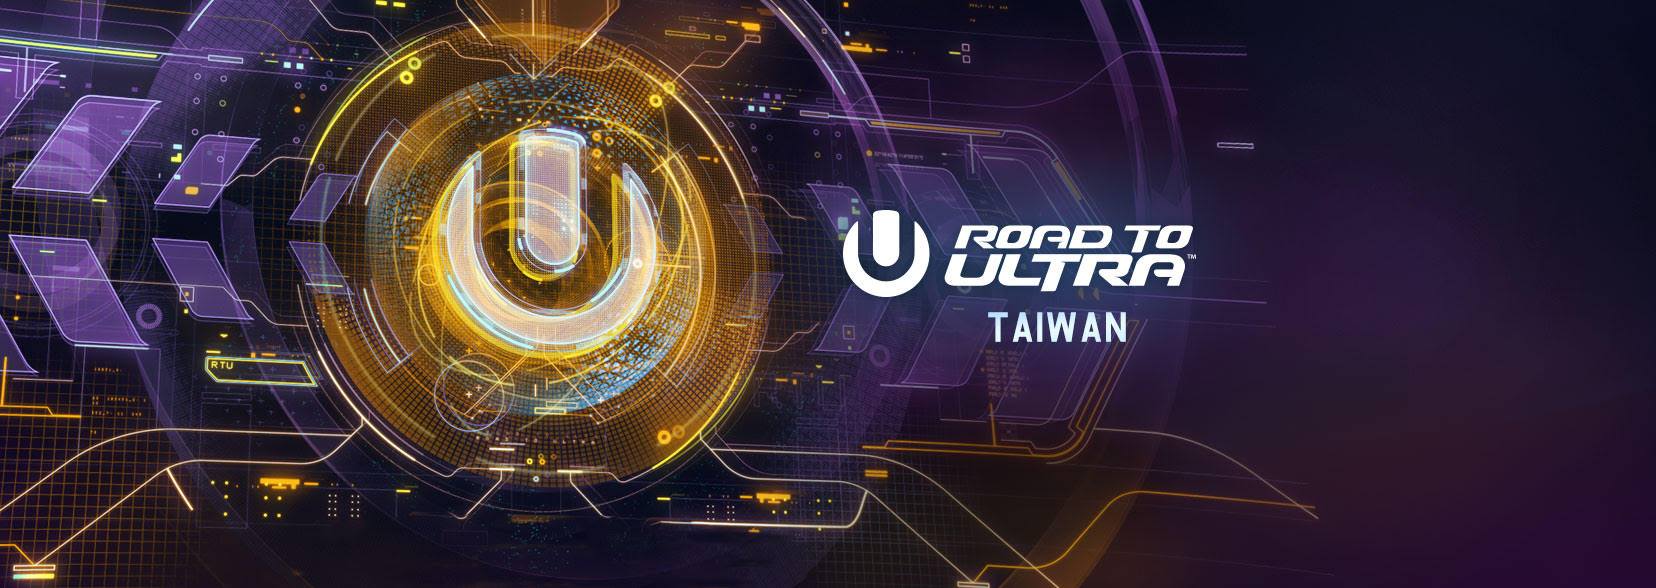 Road to Ultra Taiwan 2017_NRFmagazine